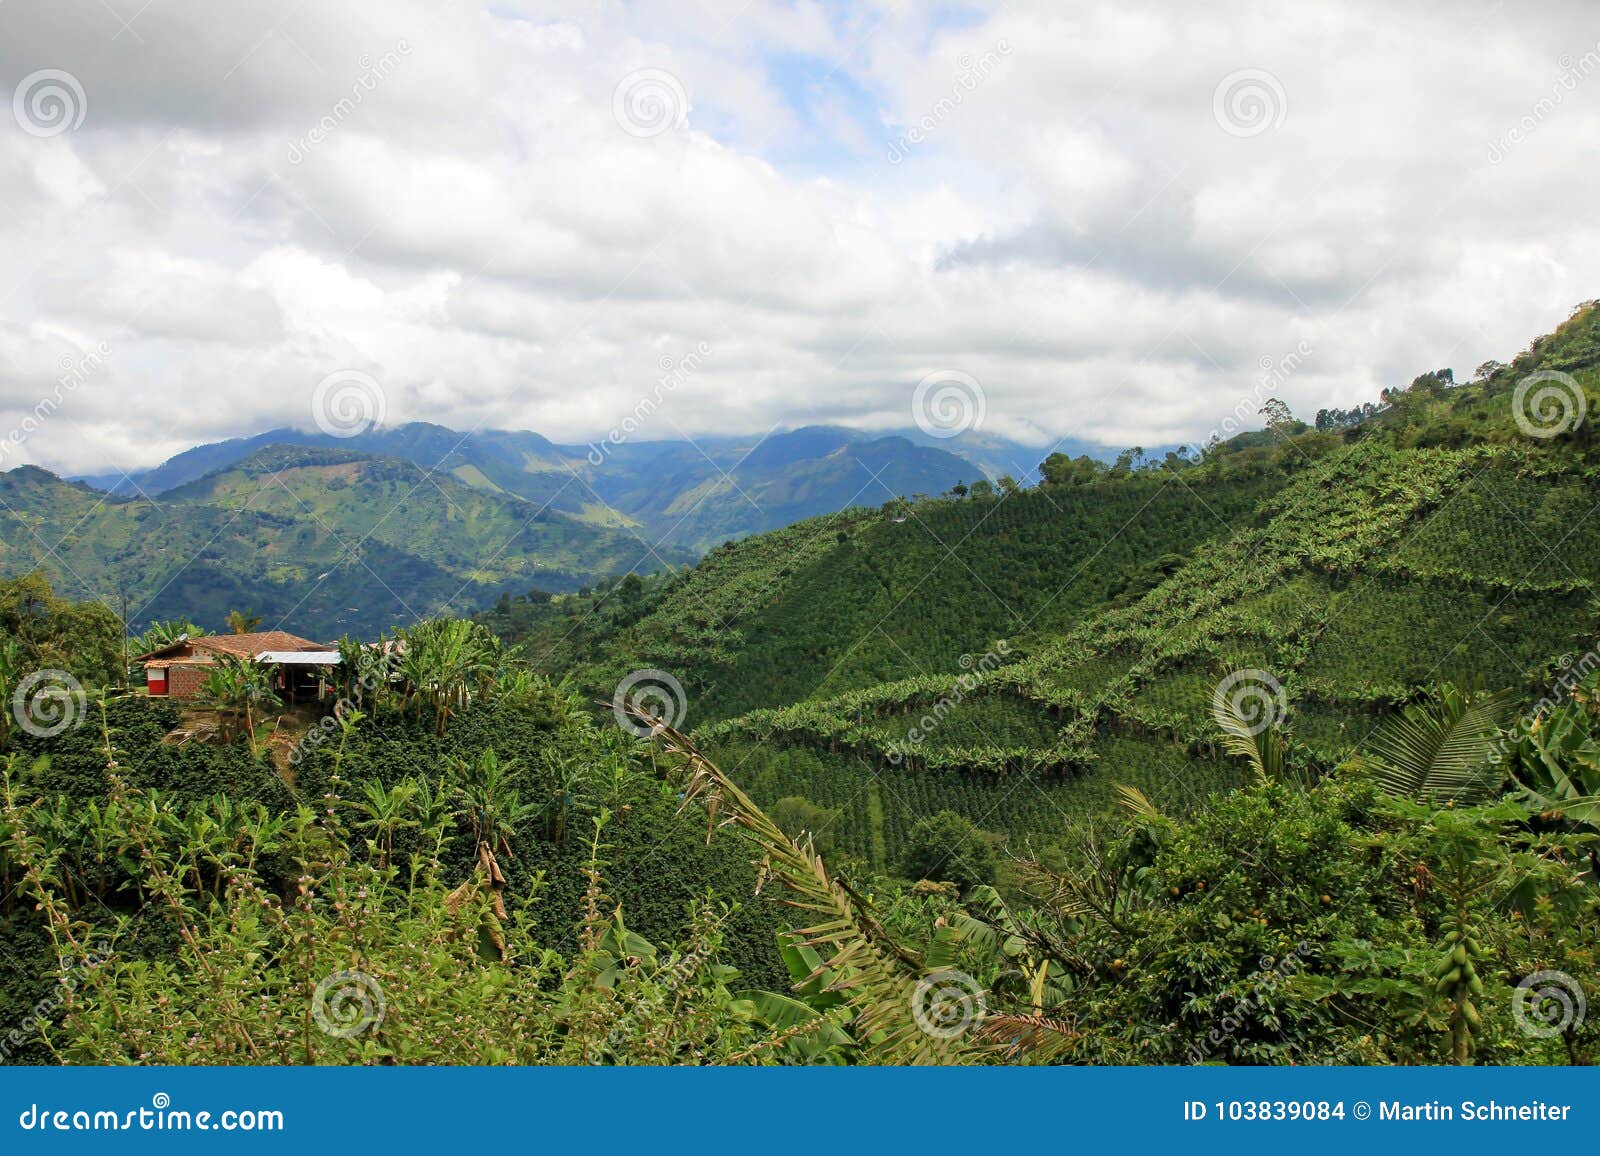 landscape of coffee and banana plants in the coffee growing region near el jardin, antioquia, colombia